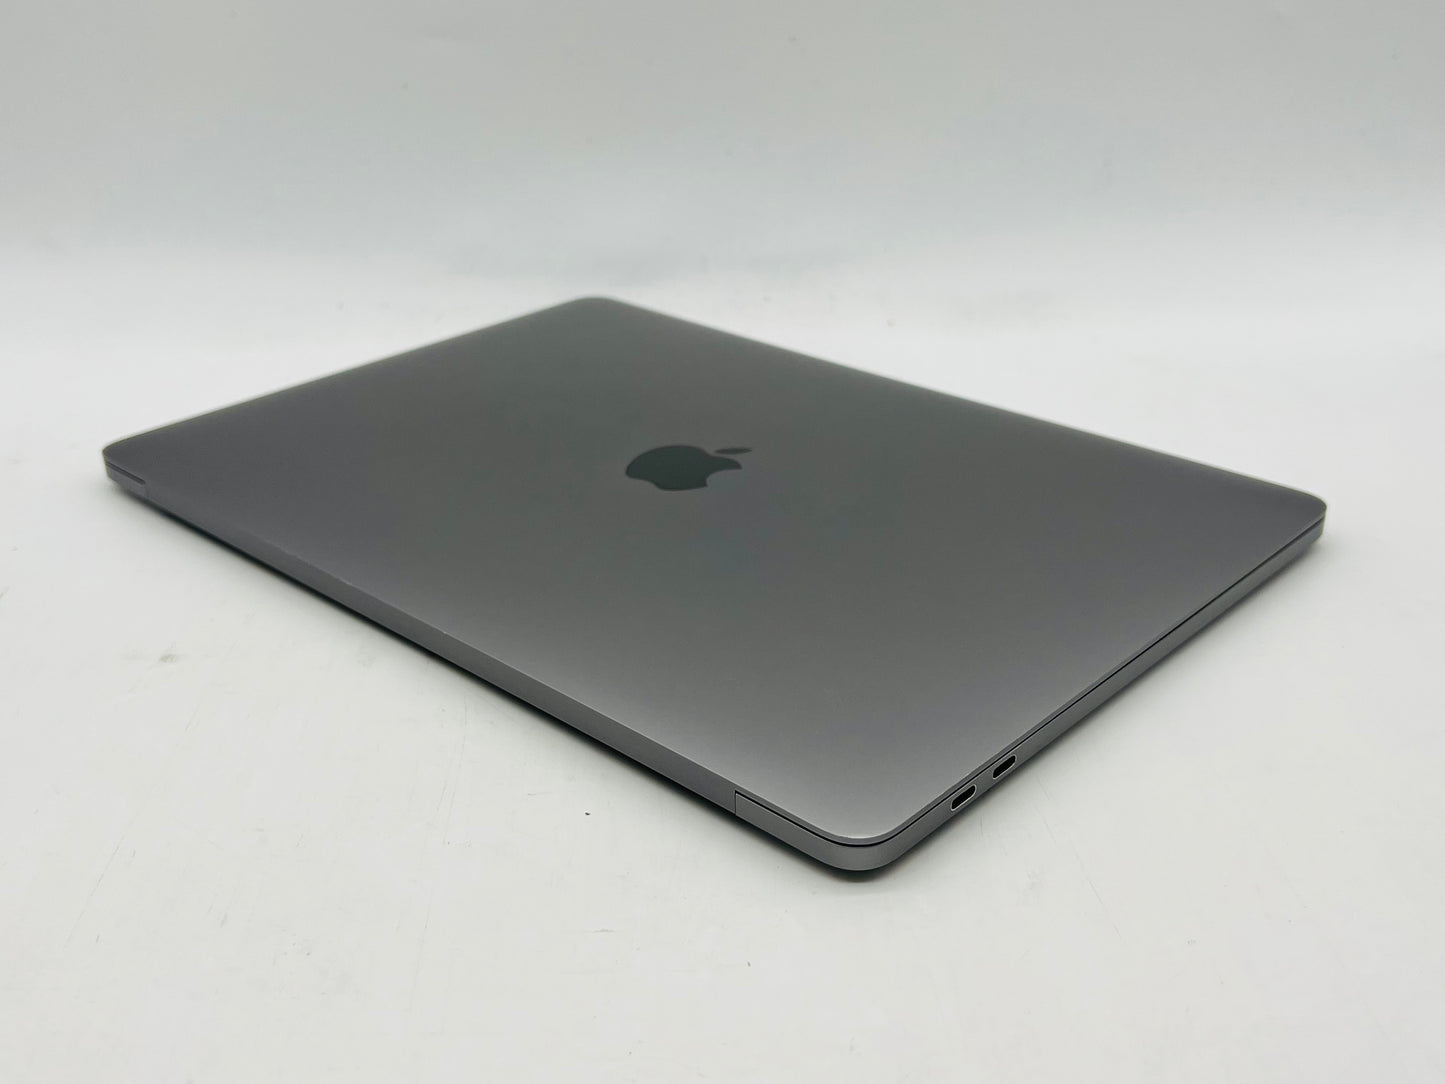 Apple 2019 MacBook Pro 13 in TB 1.7GHz Quad-Core i7 16GB RAM 128GB SSD IIPG 645